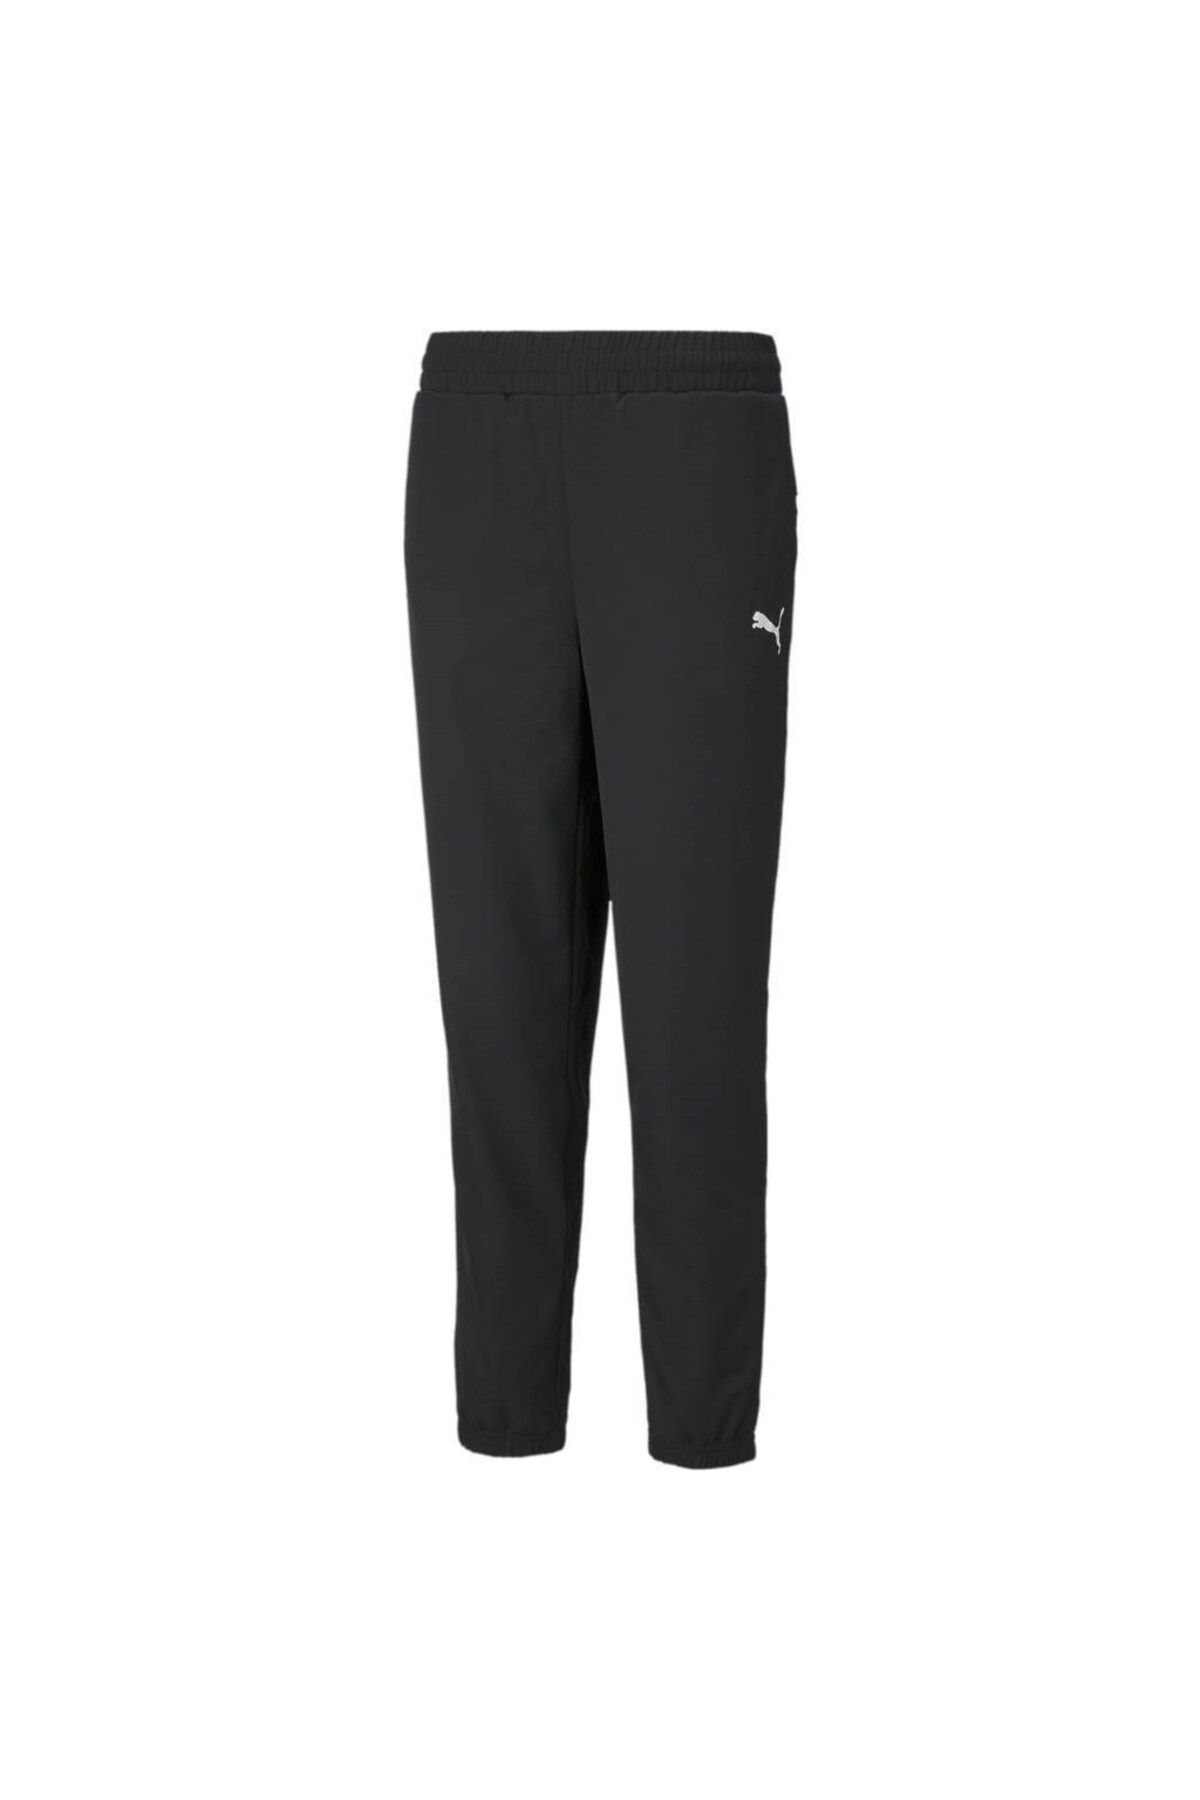 Fila Women's Sports Sweatpants - TAO - 687688_E09